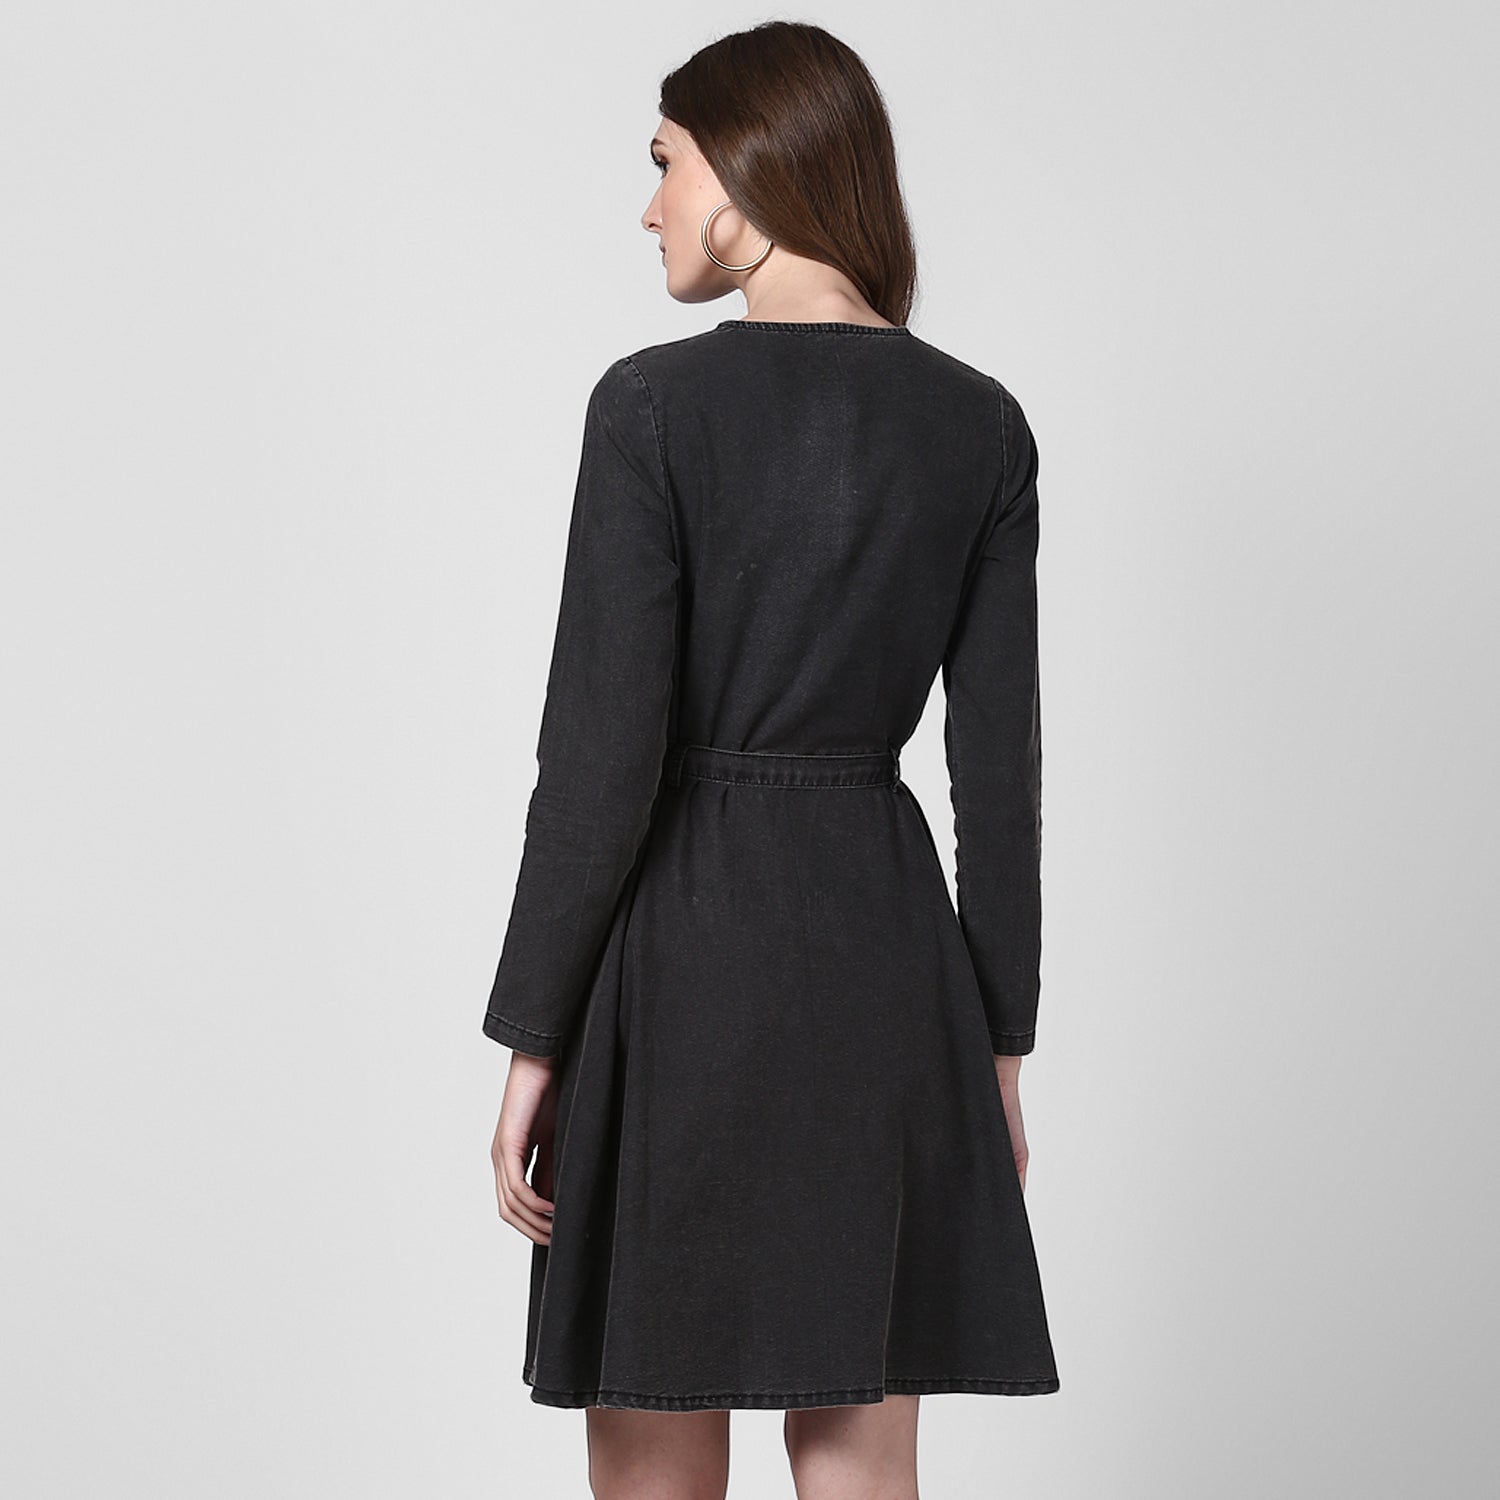 Women's Black Denim Dress with Shoulder Placket detail - StyleStone